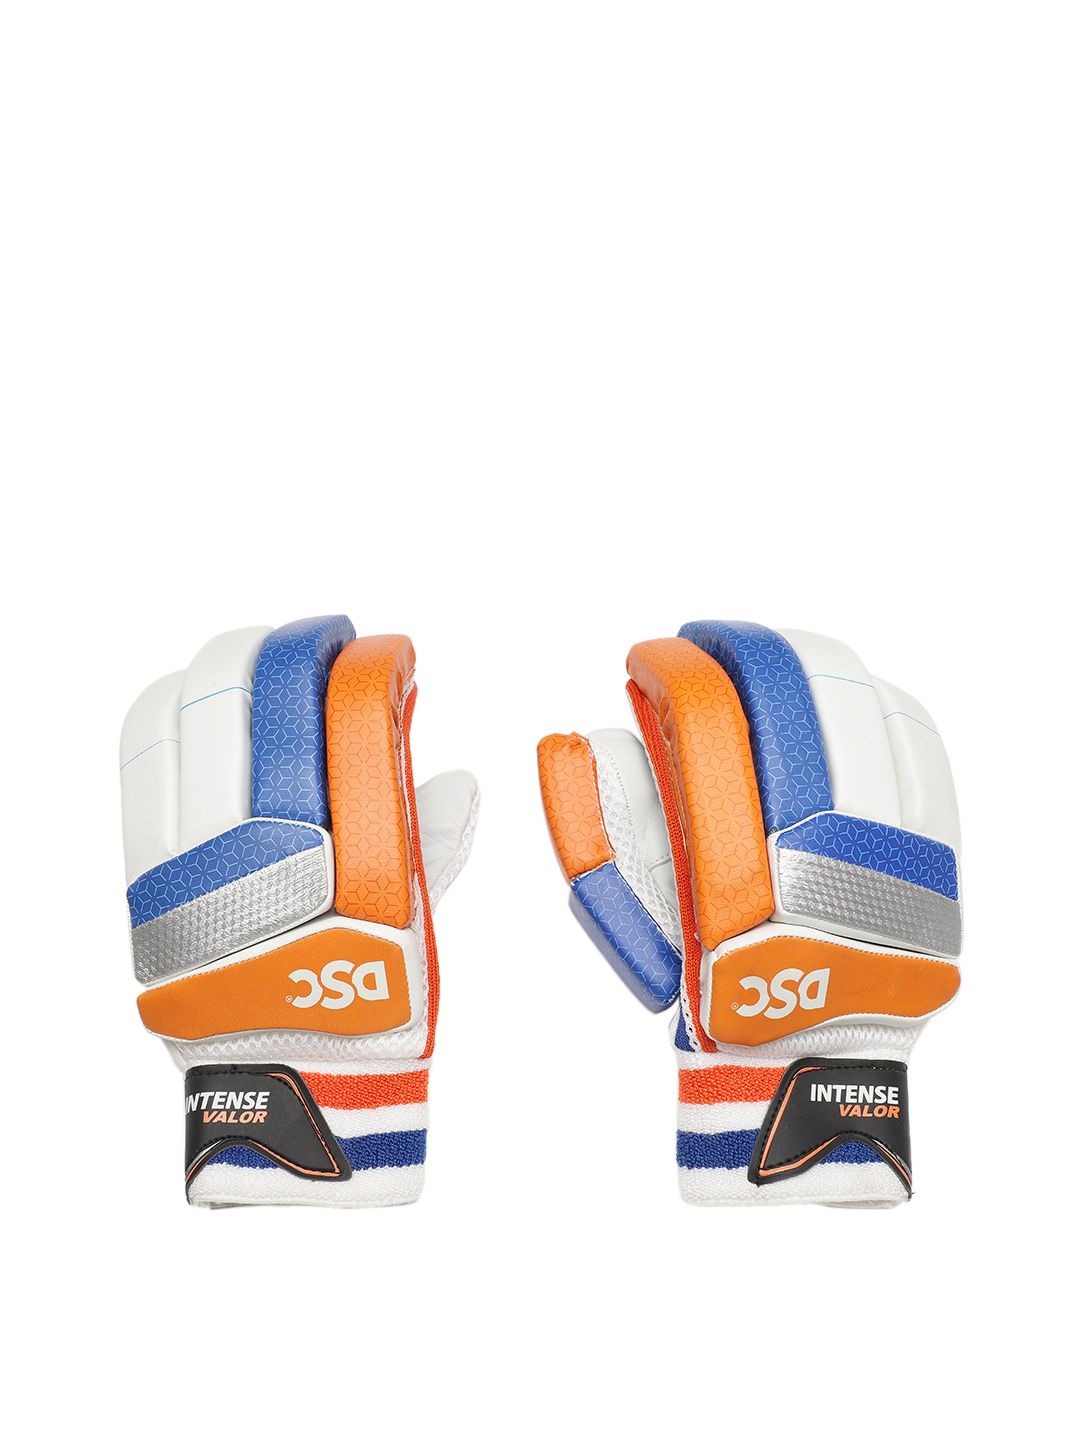 DSC Unisex White & Orange Colourblocked Intense Valor Batting Gloves Price in India